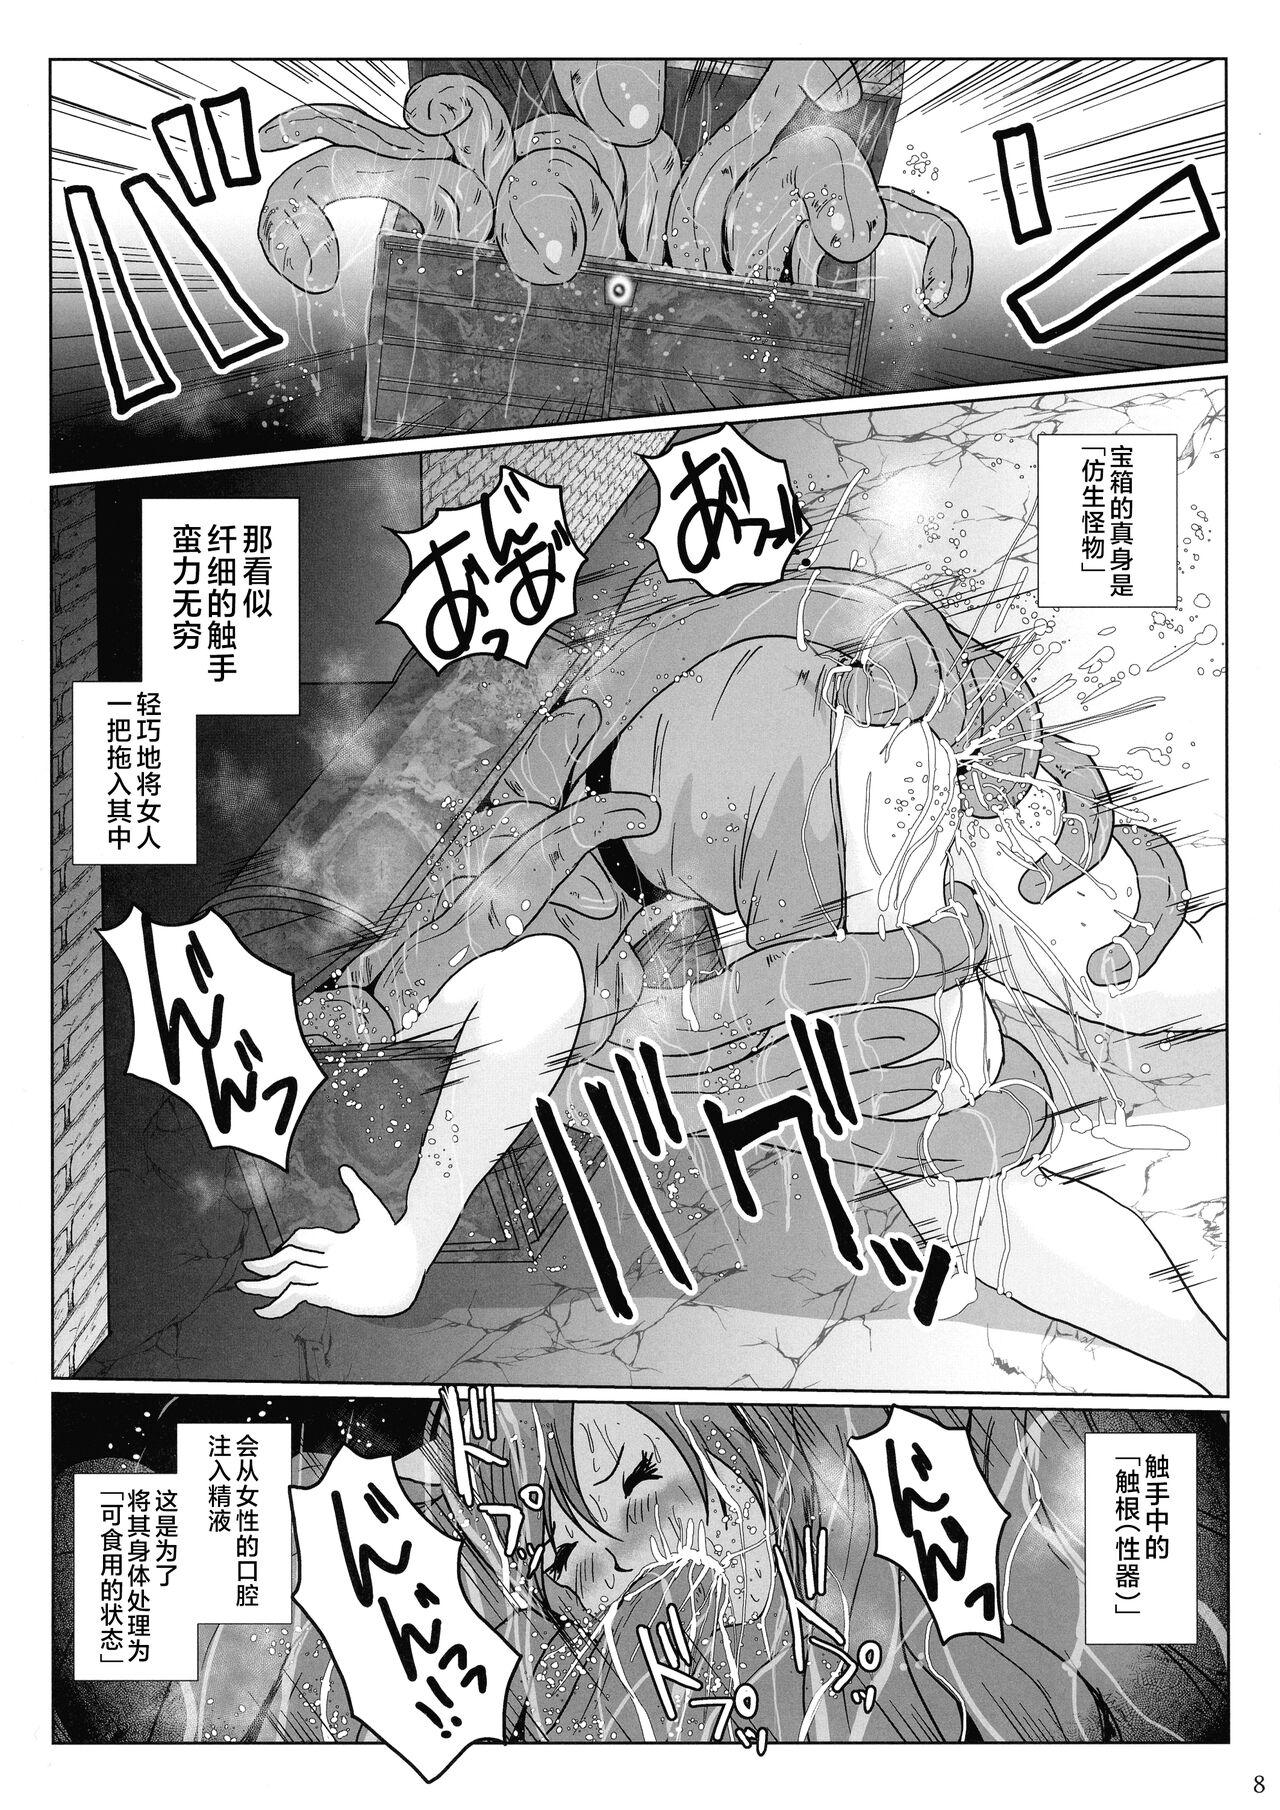 Foreskin Samayoeru Tou no Maru no Mimic - Original Eng Sub - Page 8